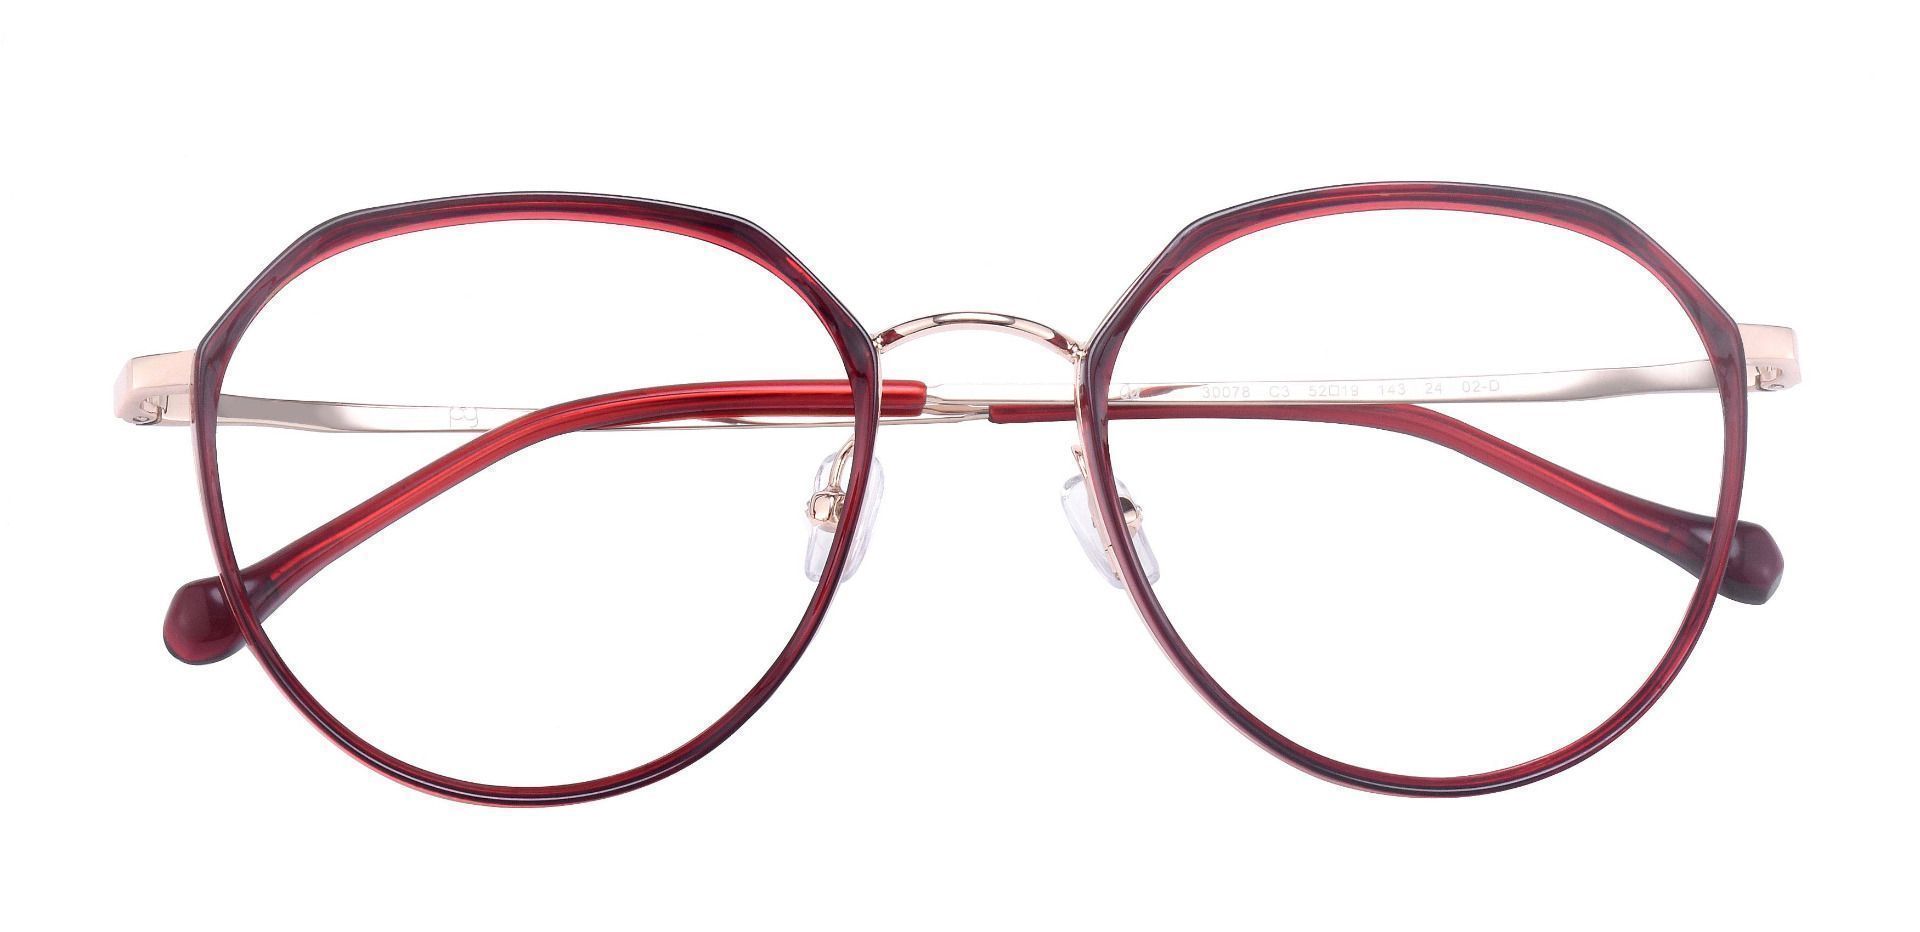 Yorke Geometric Lined Bifocal Glasses - Wine/rosegold